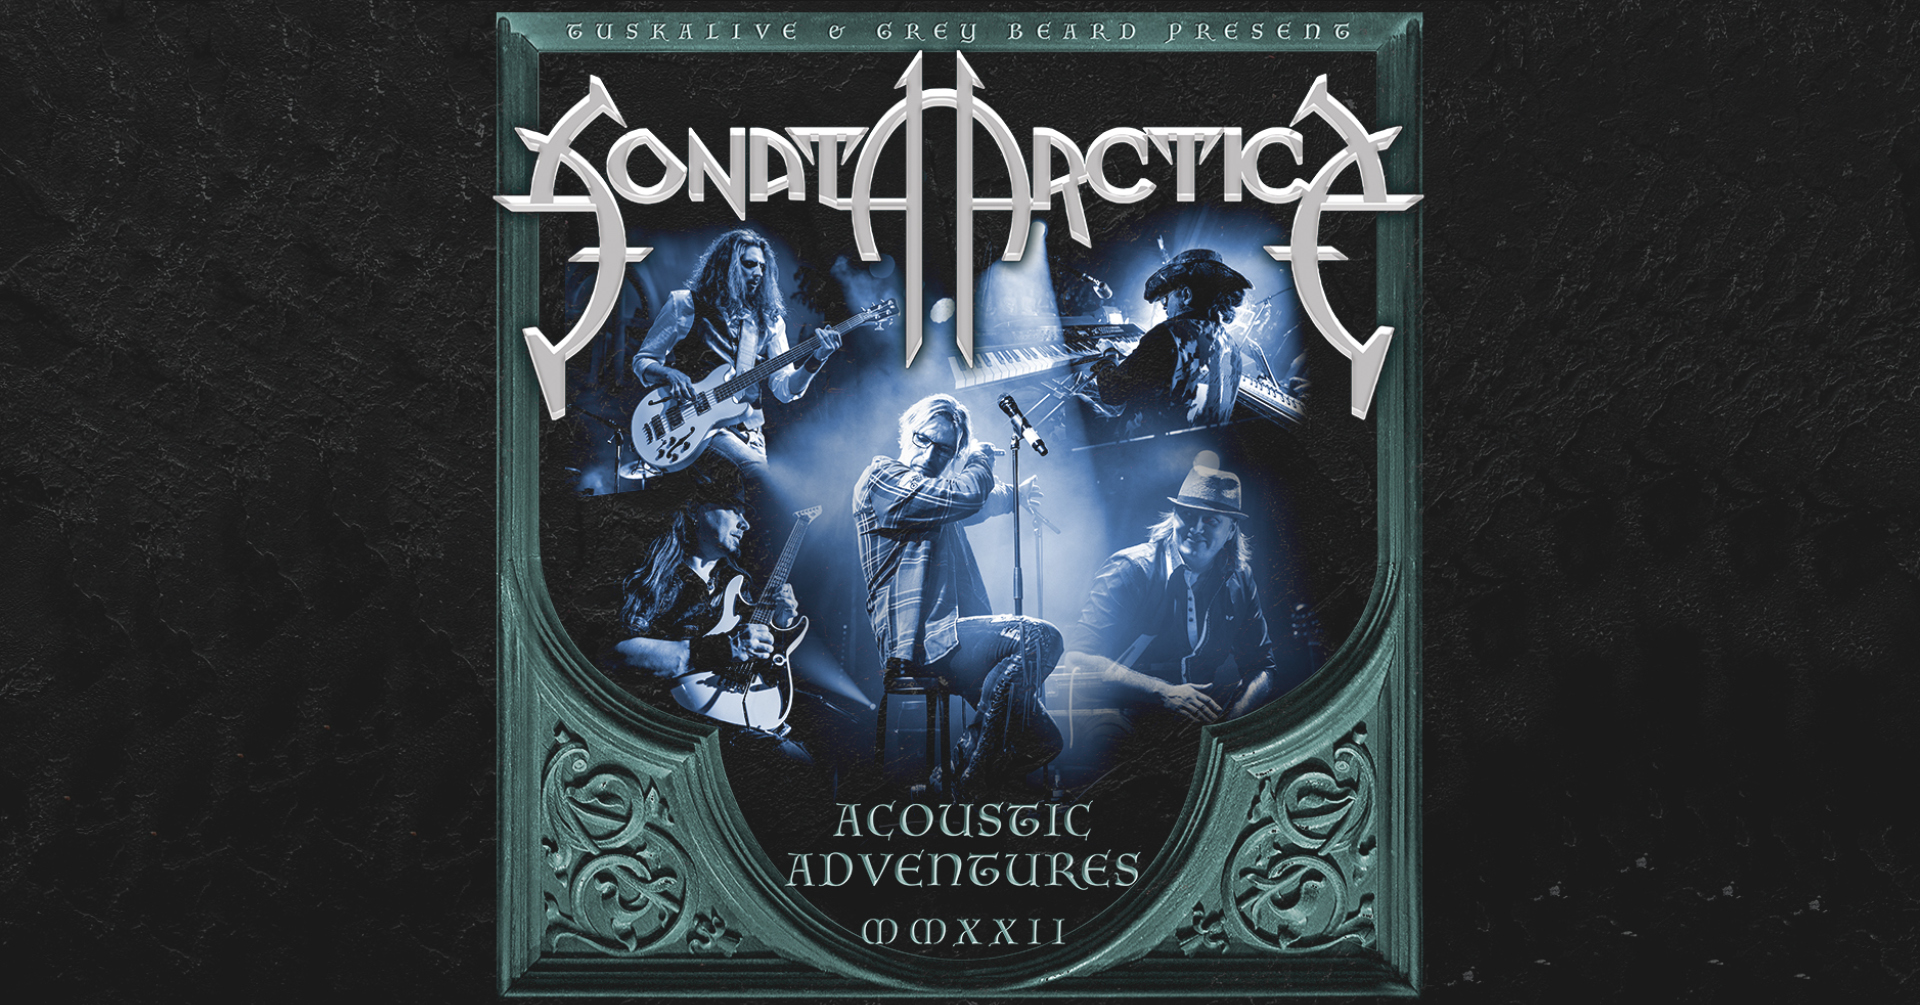 SIIRTYY 13.10.2022 - Sonata Arctica - Acoustic Adventures 2022